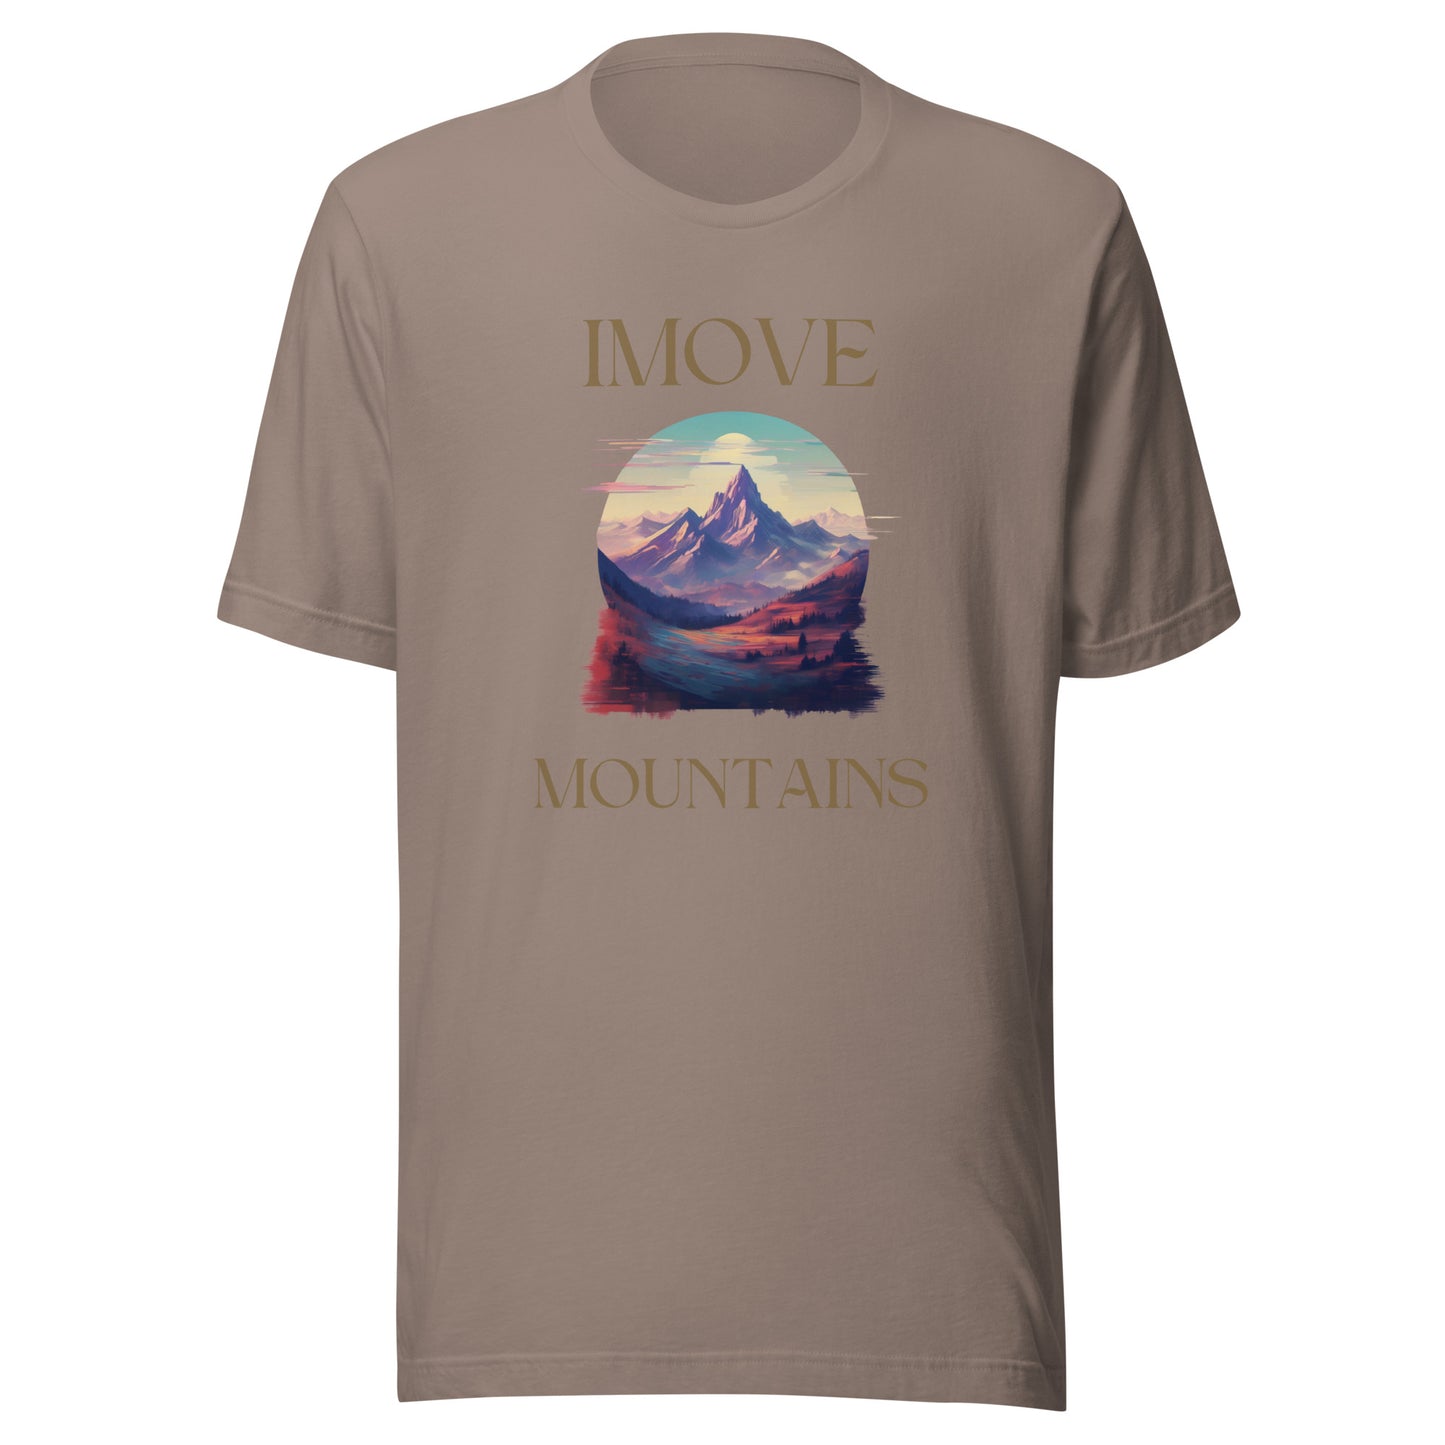 I Move Mountains - Black Gold Modern Mythological T-Shirt